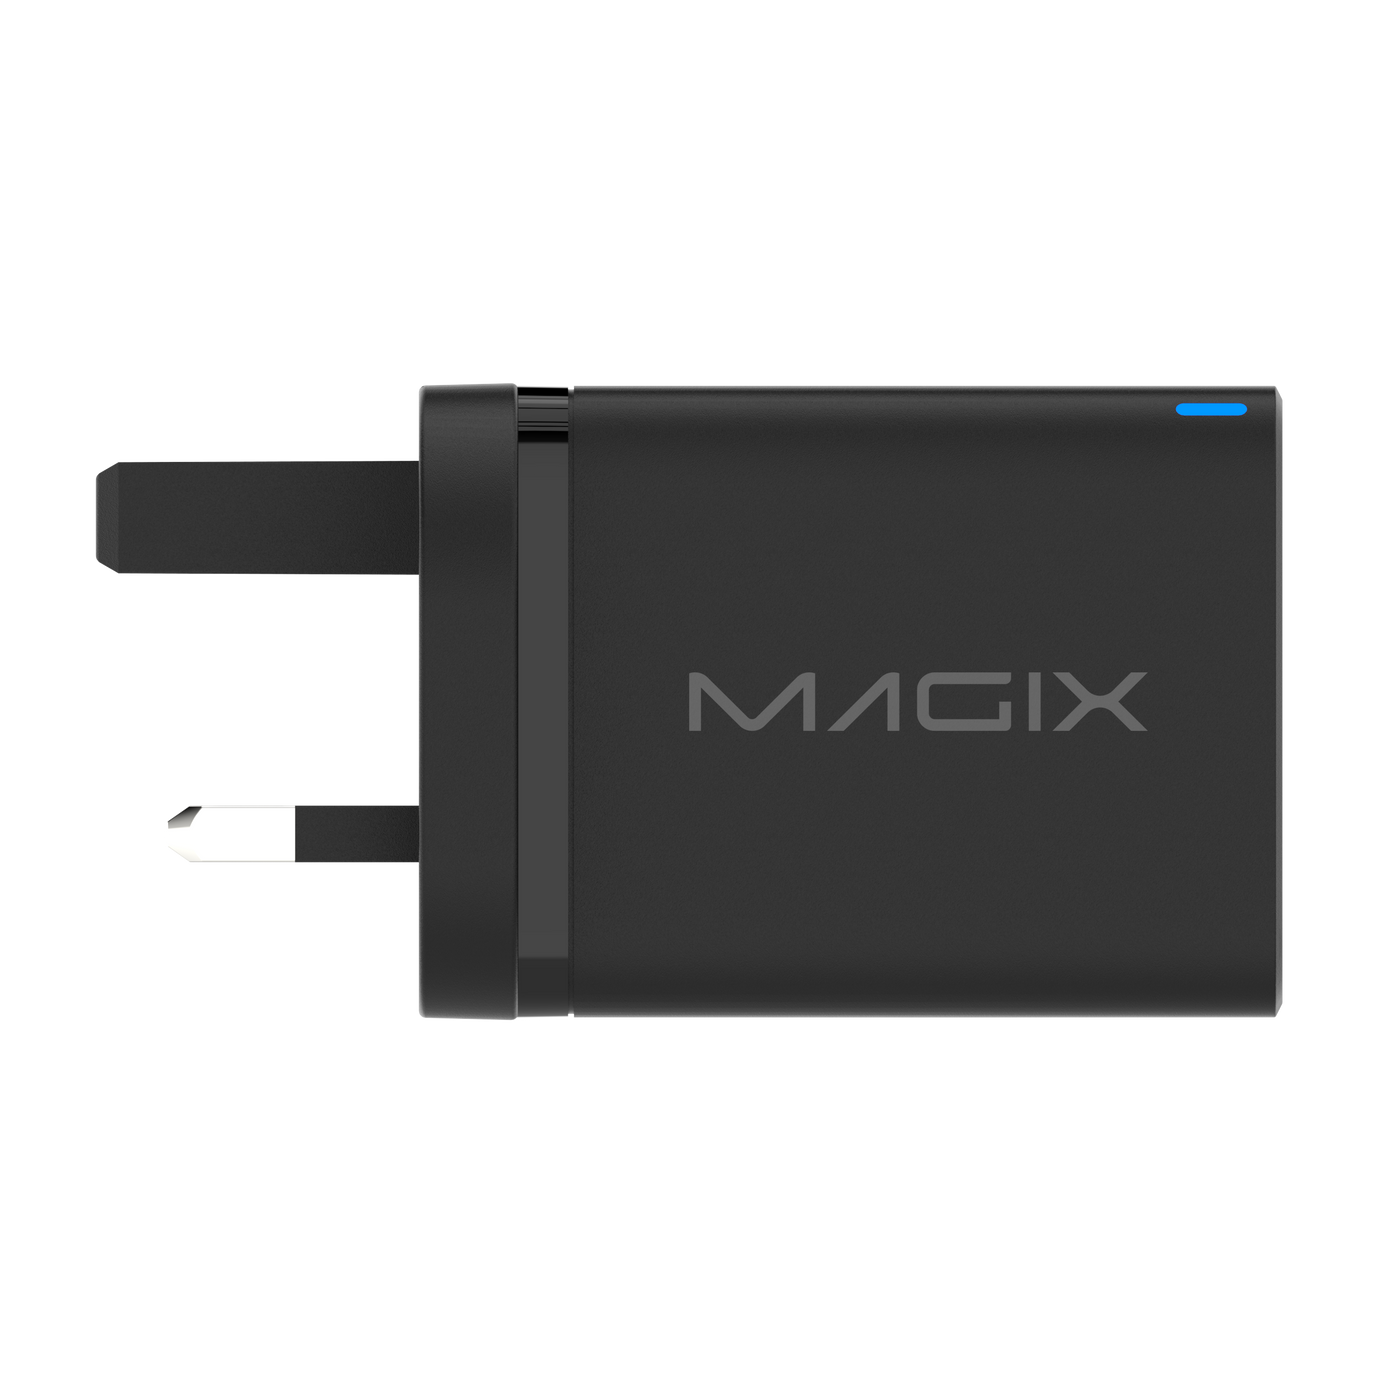 MAGIX 65W 3-Port Plug GaN Charger PD Power Delivery - UK Plug